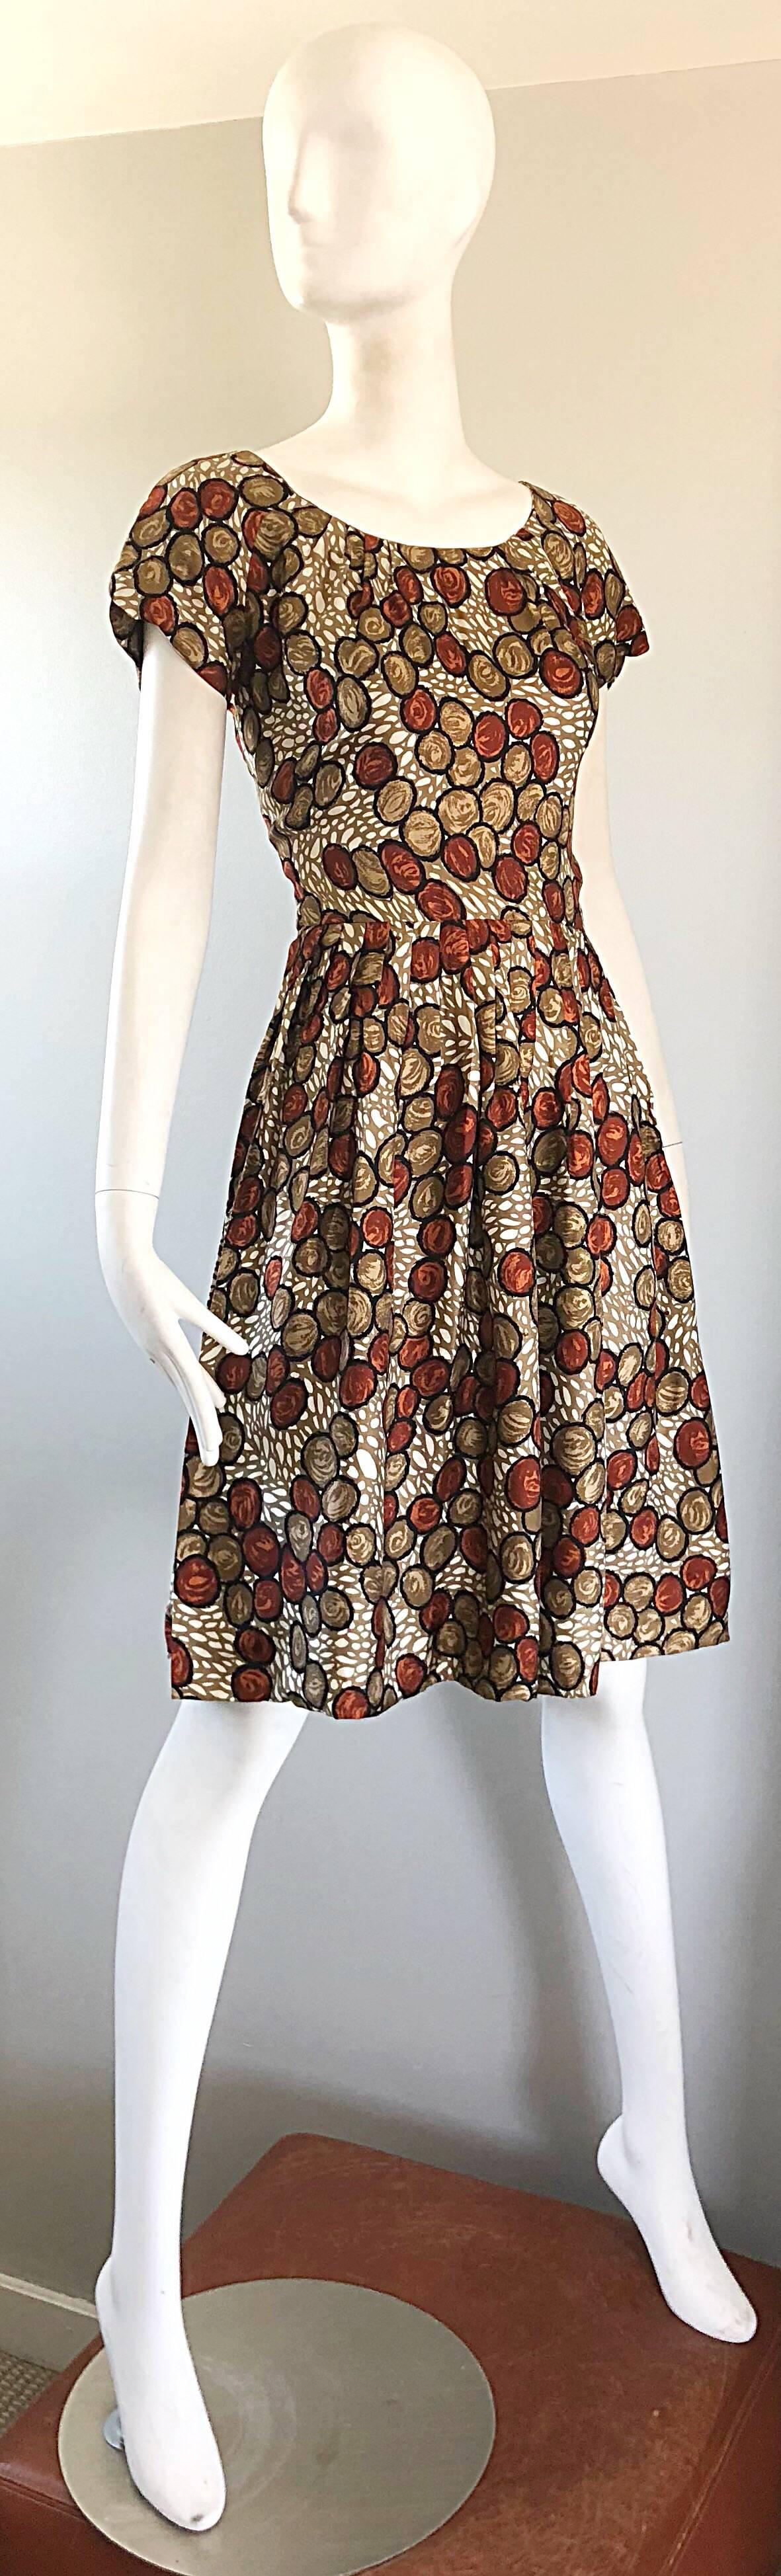 1950s Walnut Nut Print Fit n ' Flare Brown Beige Ivory Silk 50s Vintage Dress  2